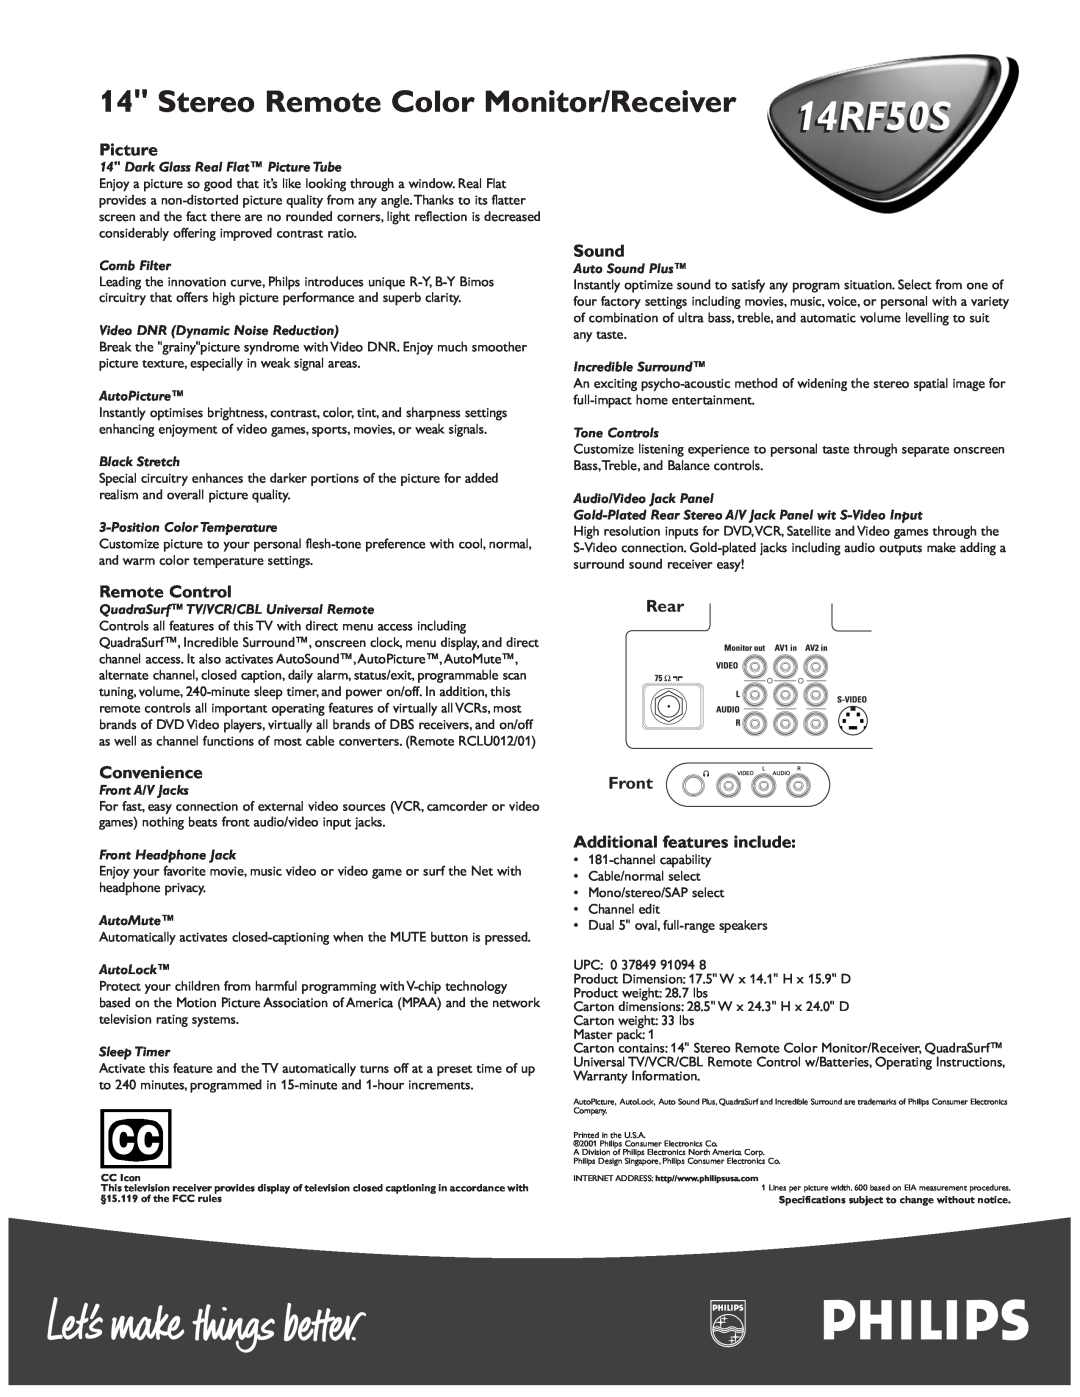 Philips 14RF50S manual Stereo Remote Color Monitor/Receiver, Picture, Sound, Remote Control, Rear, Convenience 